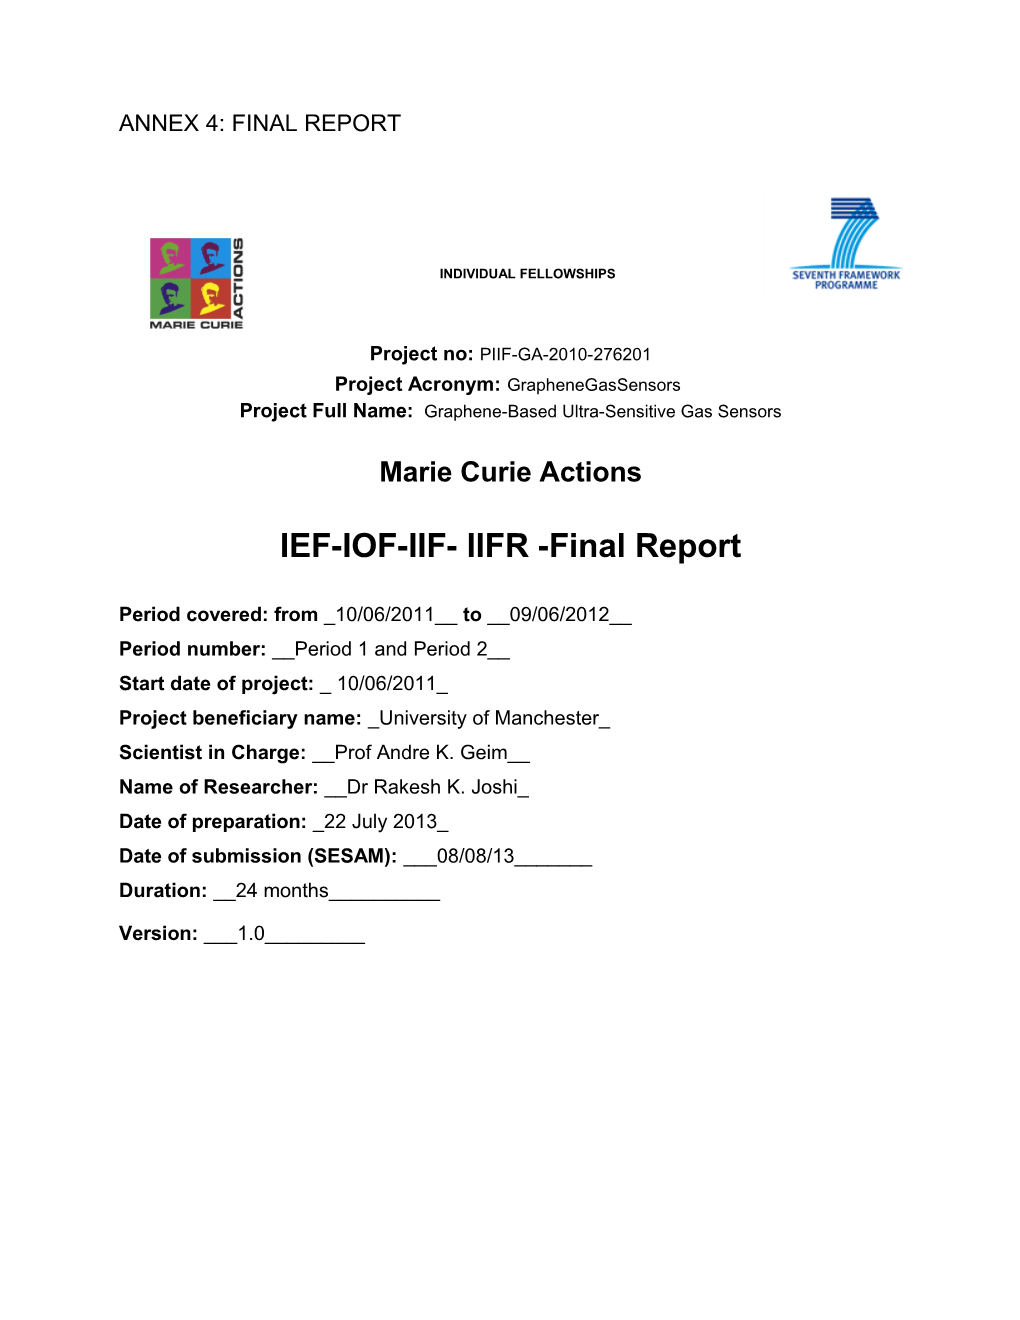 Annex 4: Final Report